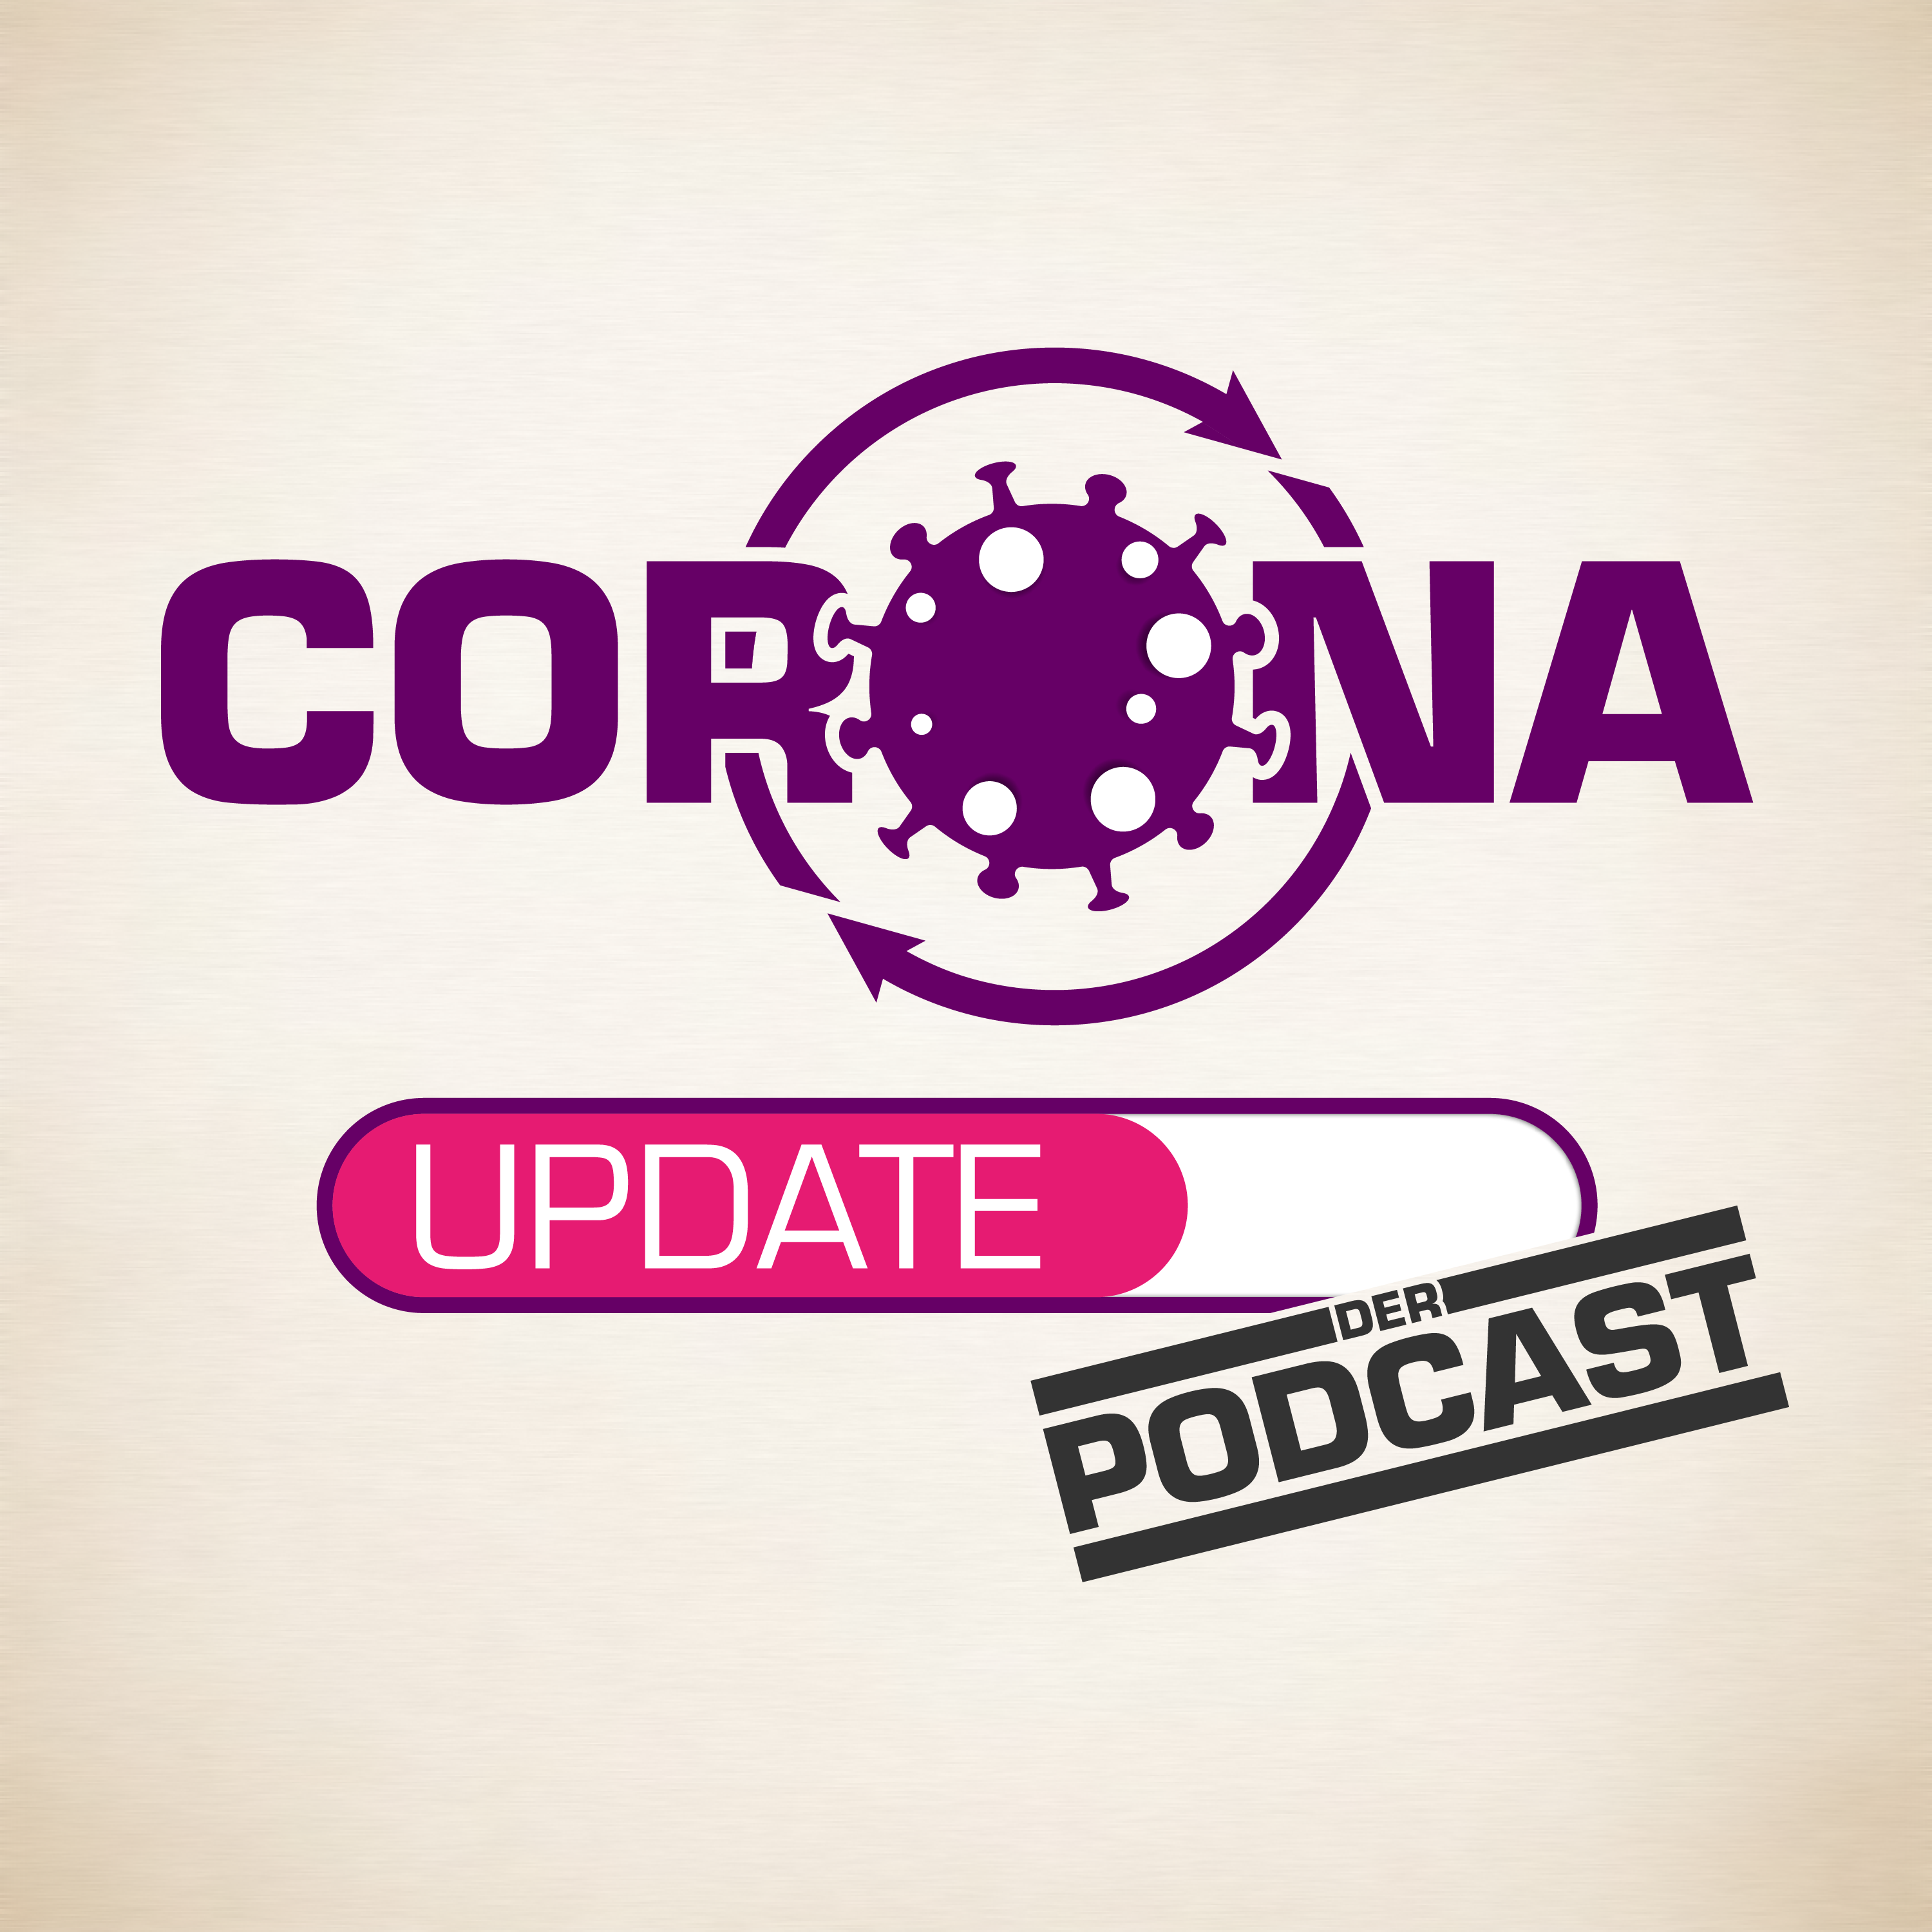 Corona Update der Podcast